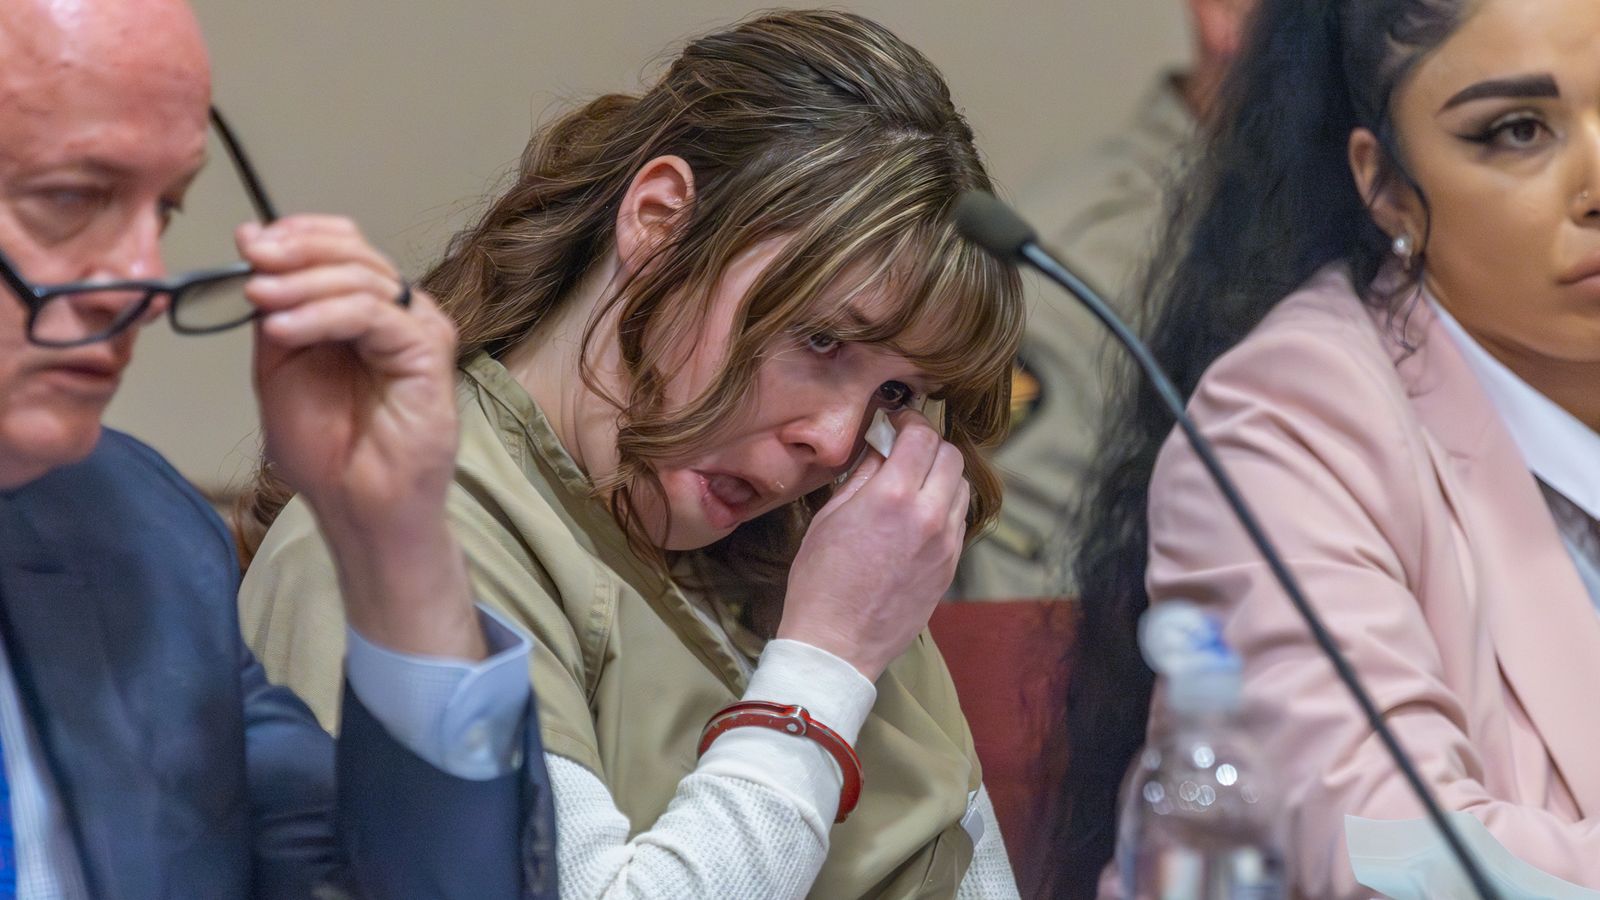 Rust weapons supervisor Hannah Gutierrez jailed over fatal shooting on Alec Baldwin film set | Ents & Arts News